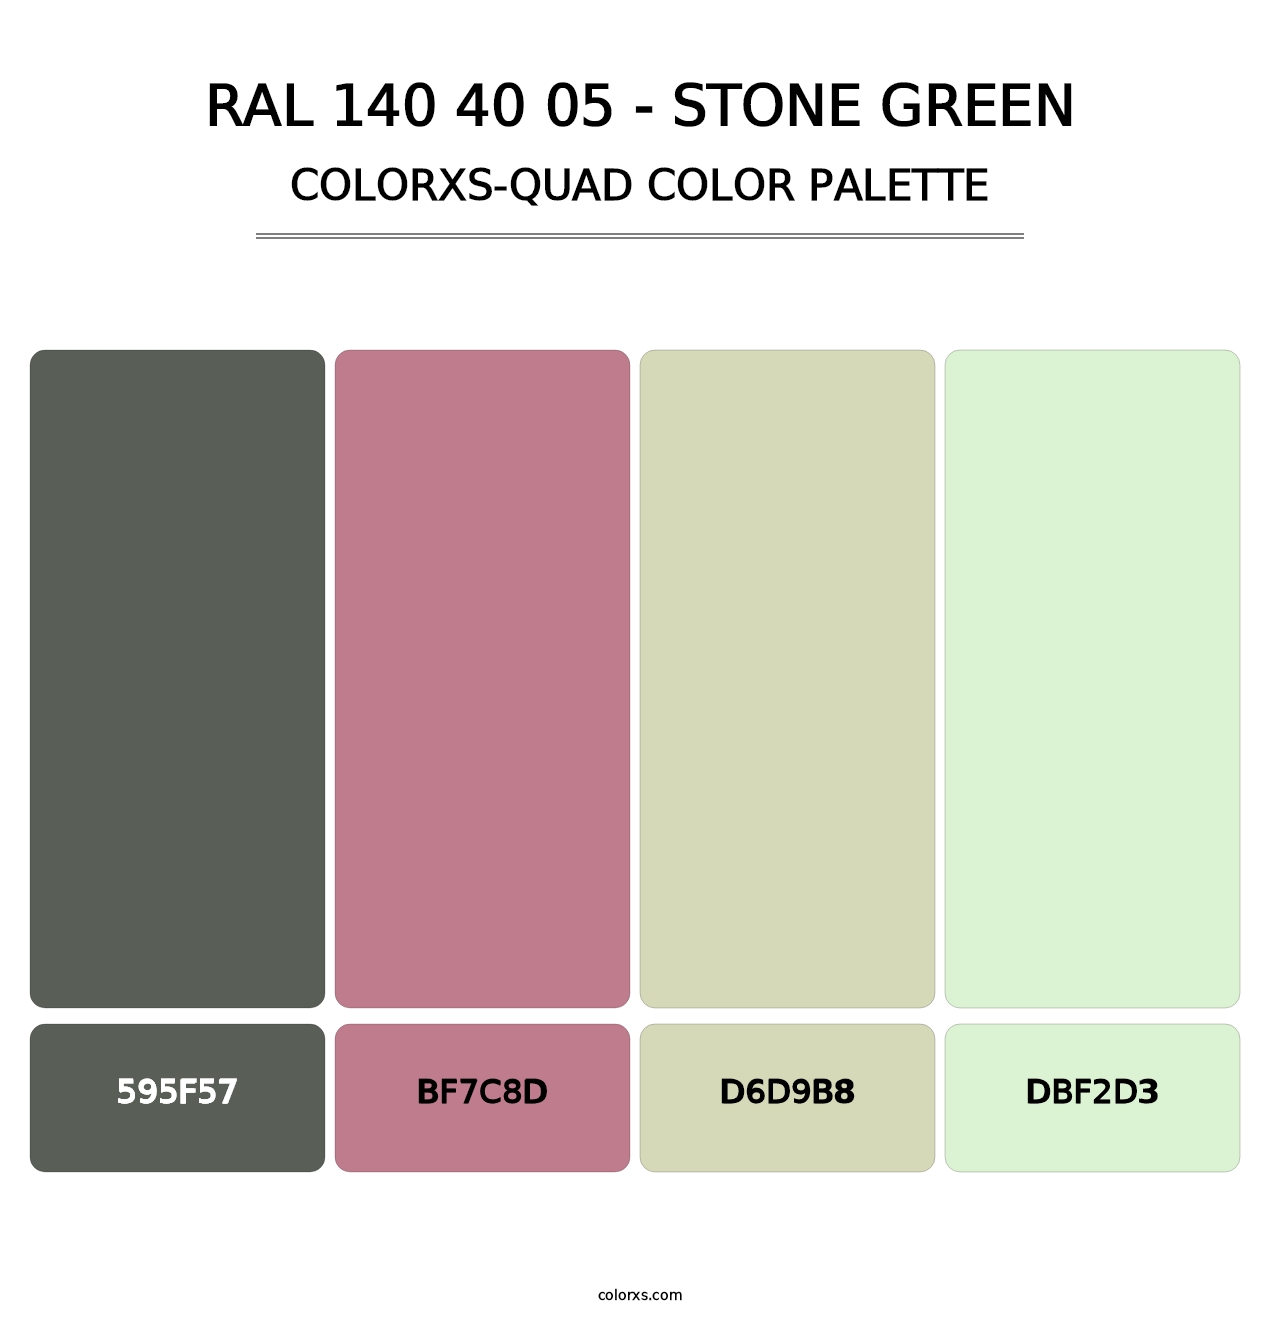 RAL 140 40 05 - Stone Green - Colorxs Quad Palette